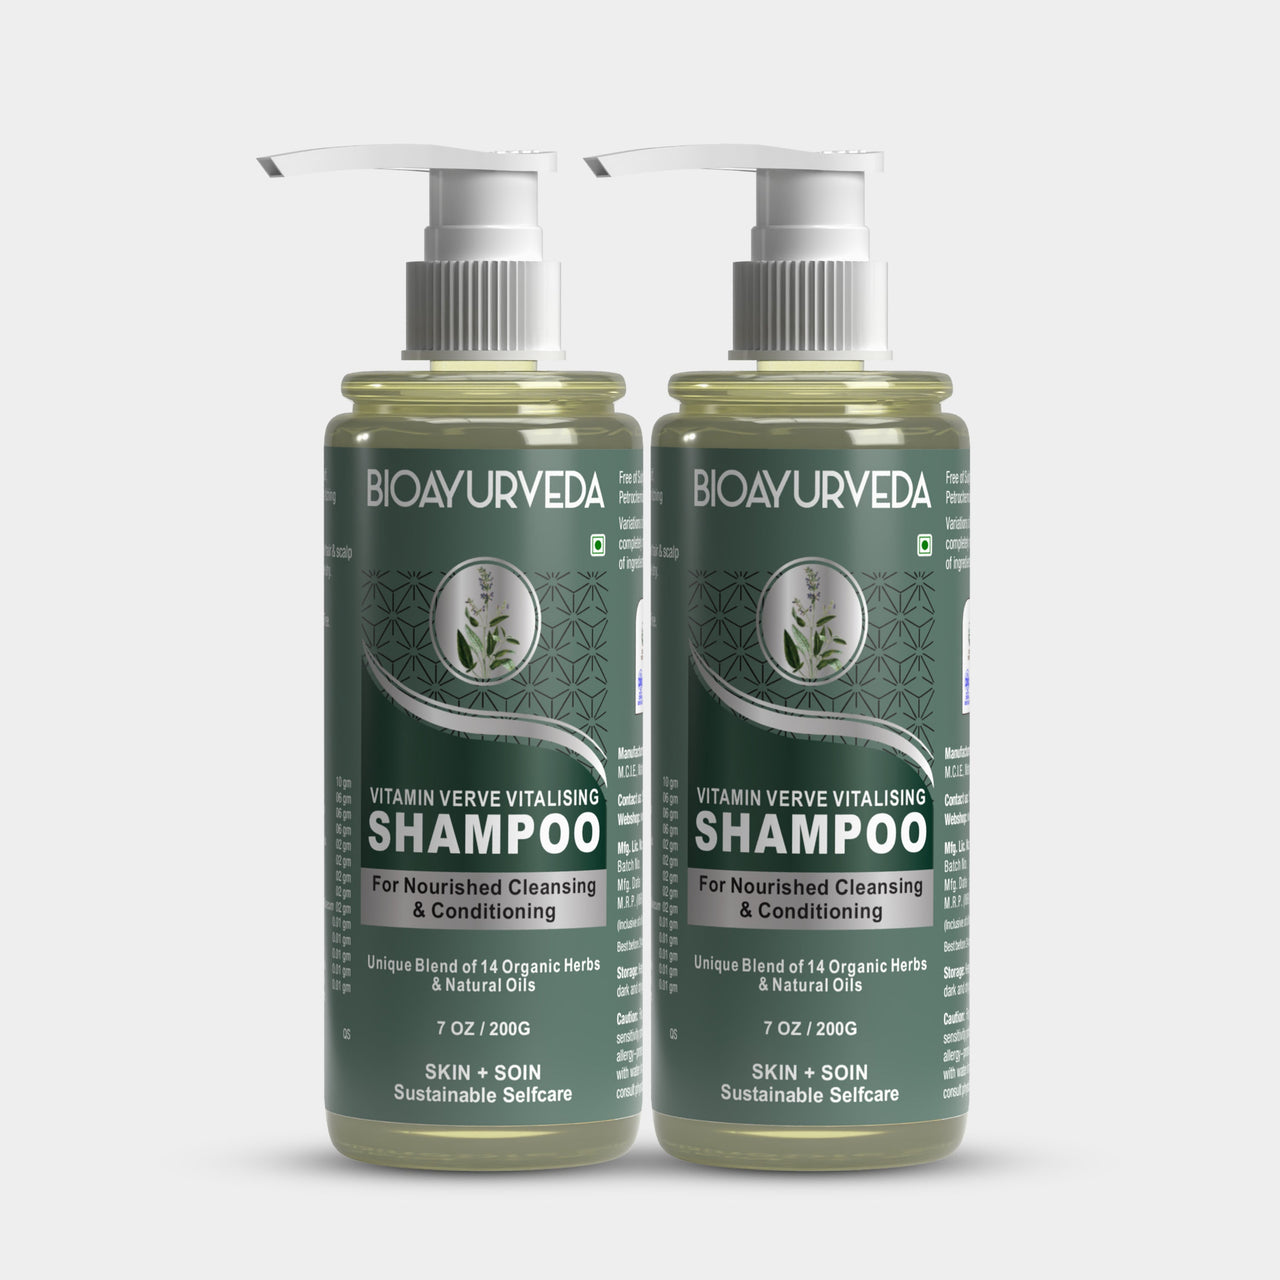 Vitamin Verve Vitalising Shampoo Combo